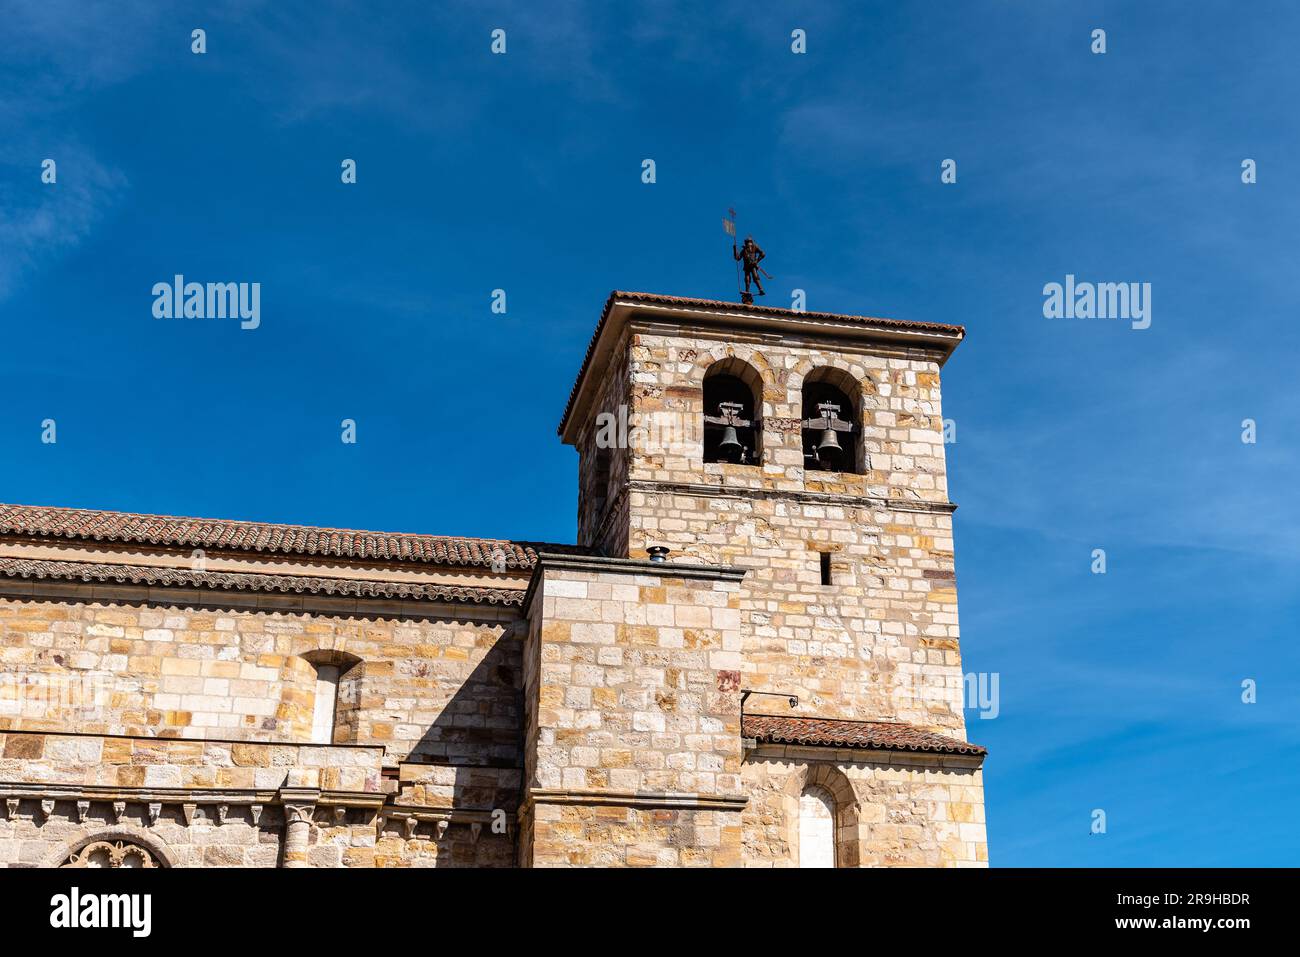 Exterior view of the Church of San Juan de Puerta Nueva in Zamora, Spain Stock Photo